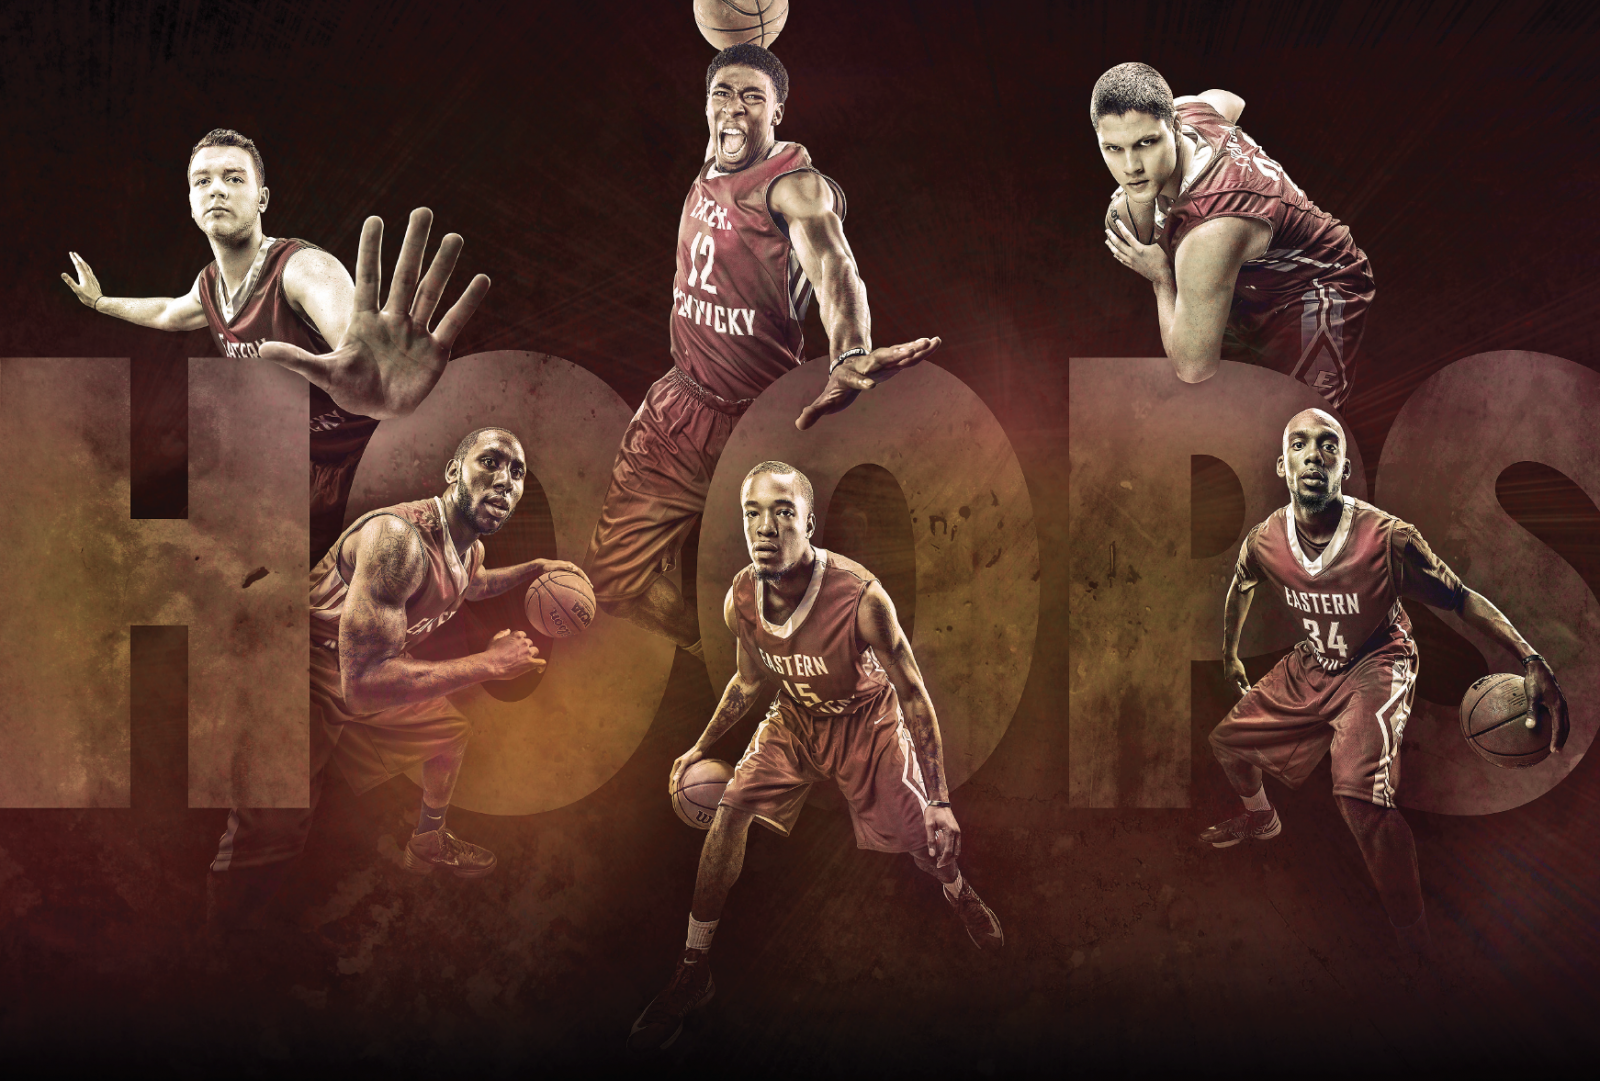 2013-14 Eastern Kentucky University basketball poster